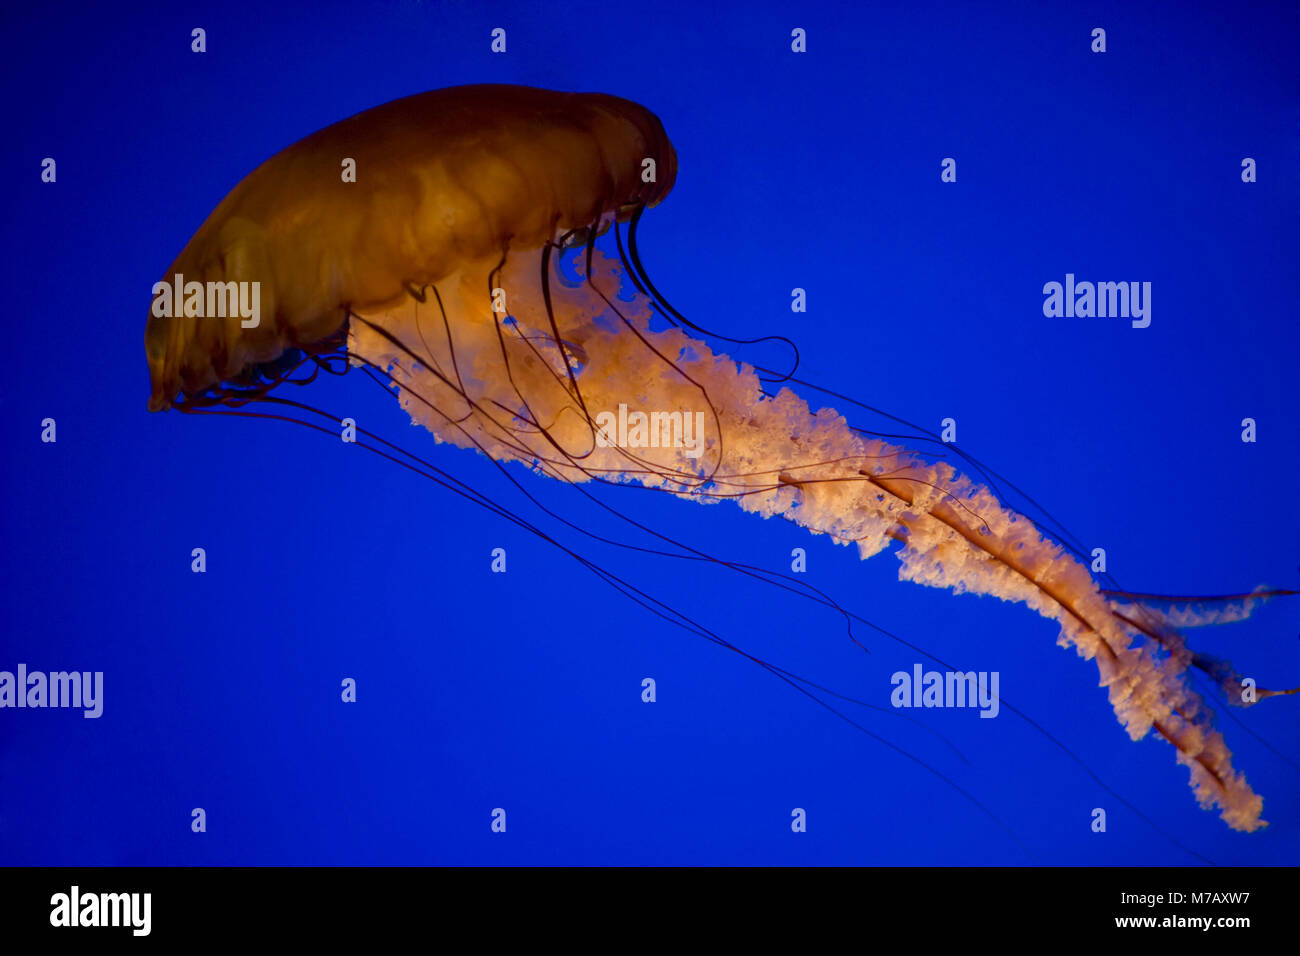 Close-up of a Jelly fish (Chironex fleckeri) in an aquarium, Monterey Bay Aquarium, Monterey, California, USA Stock Photo